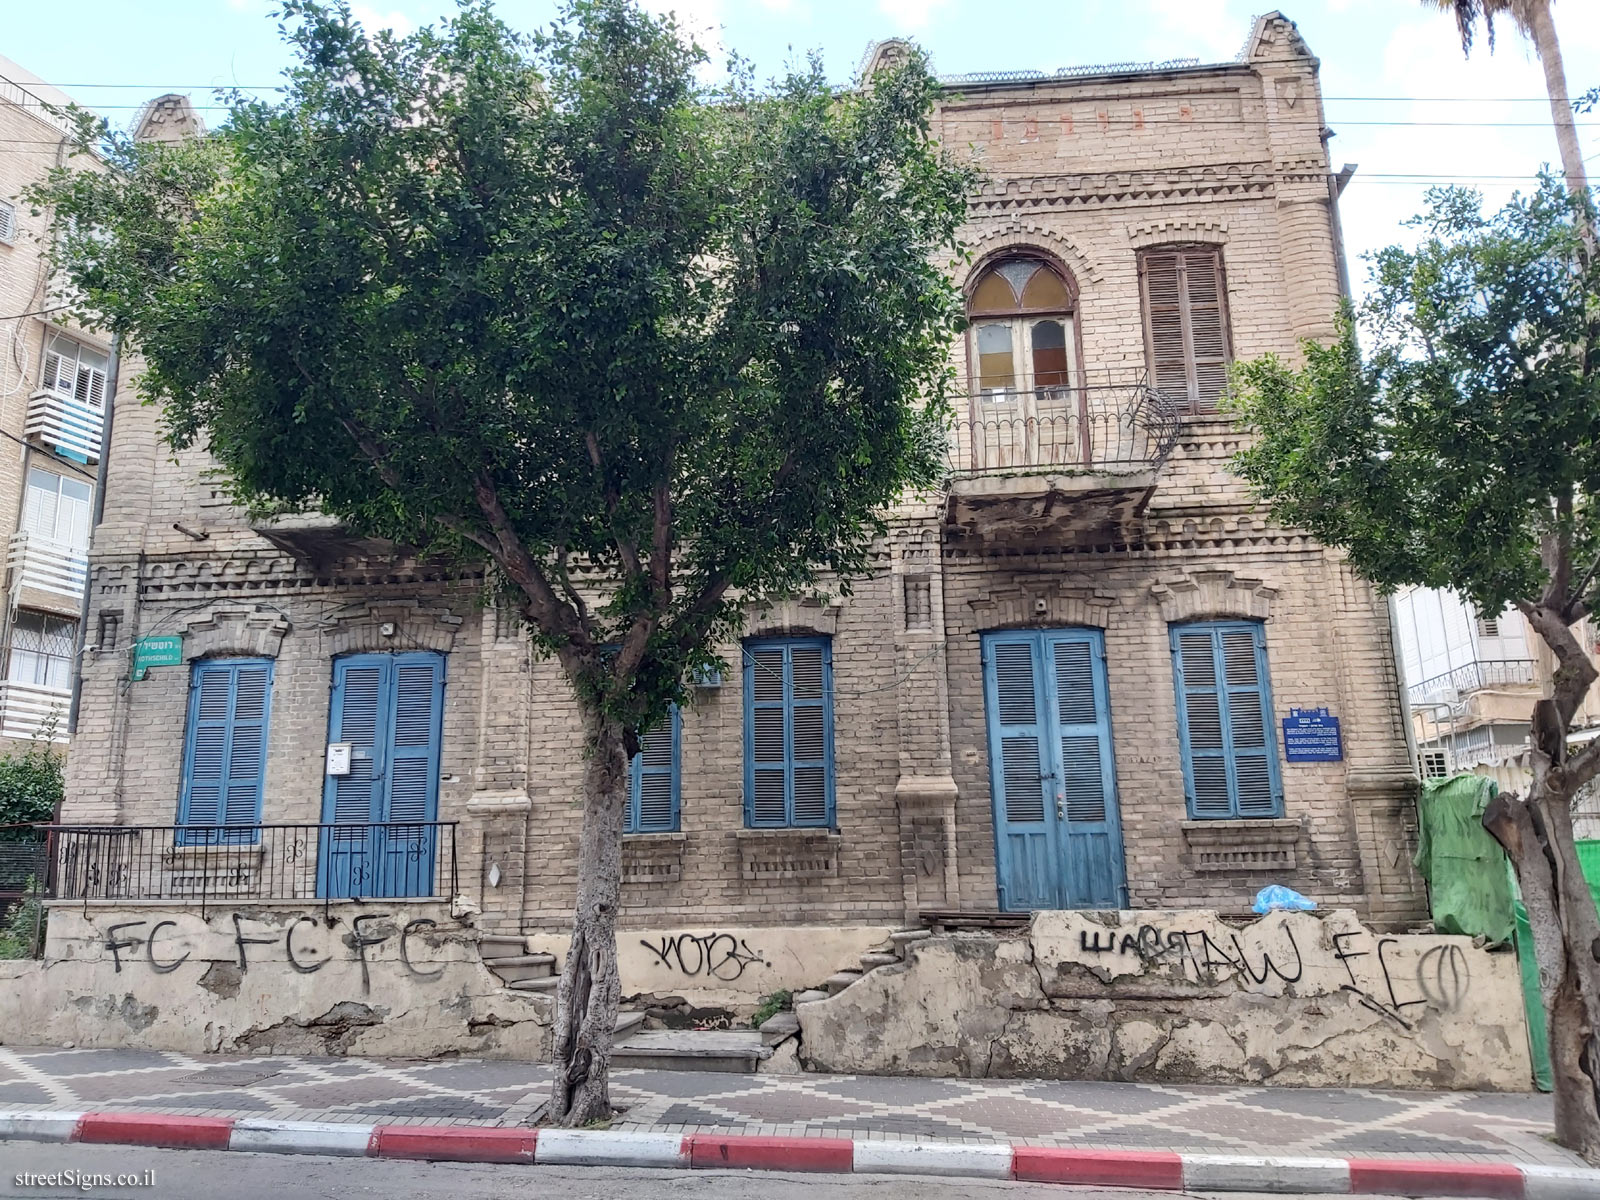 Heritage Sites in Israel - Goodman-Rothbard House - Rothschild St 62, Petah Tikva, Israel